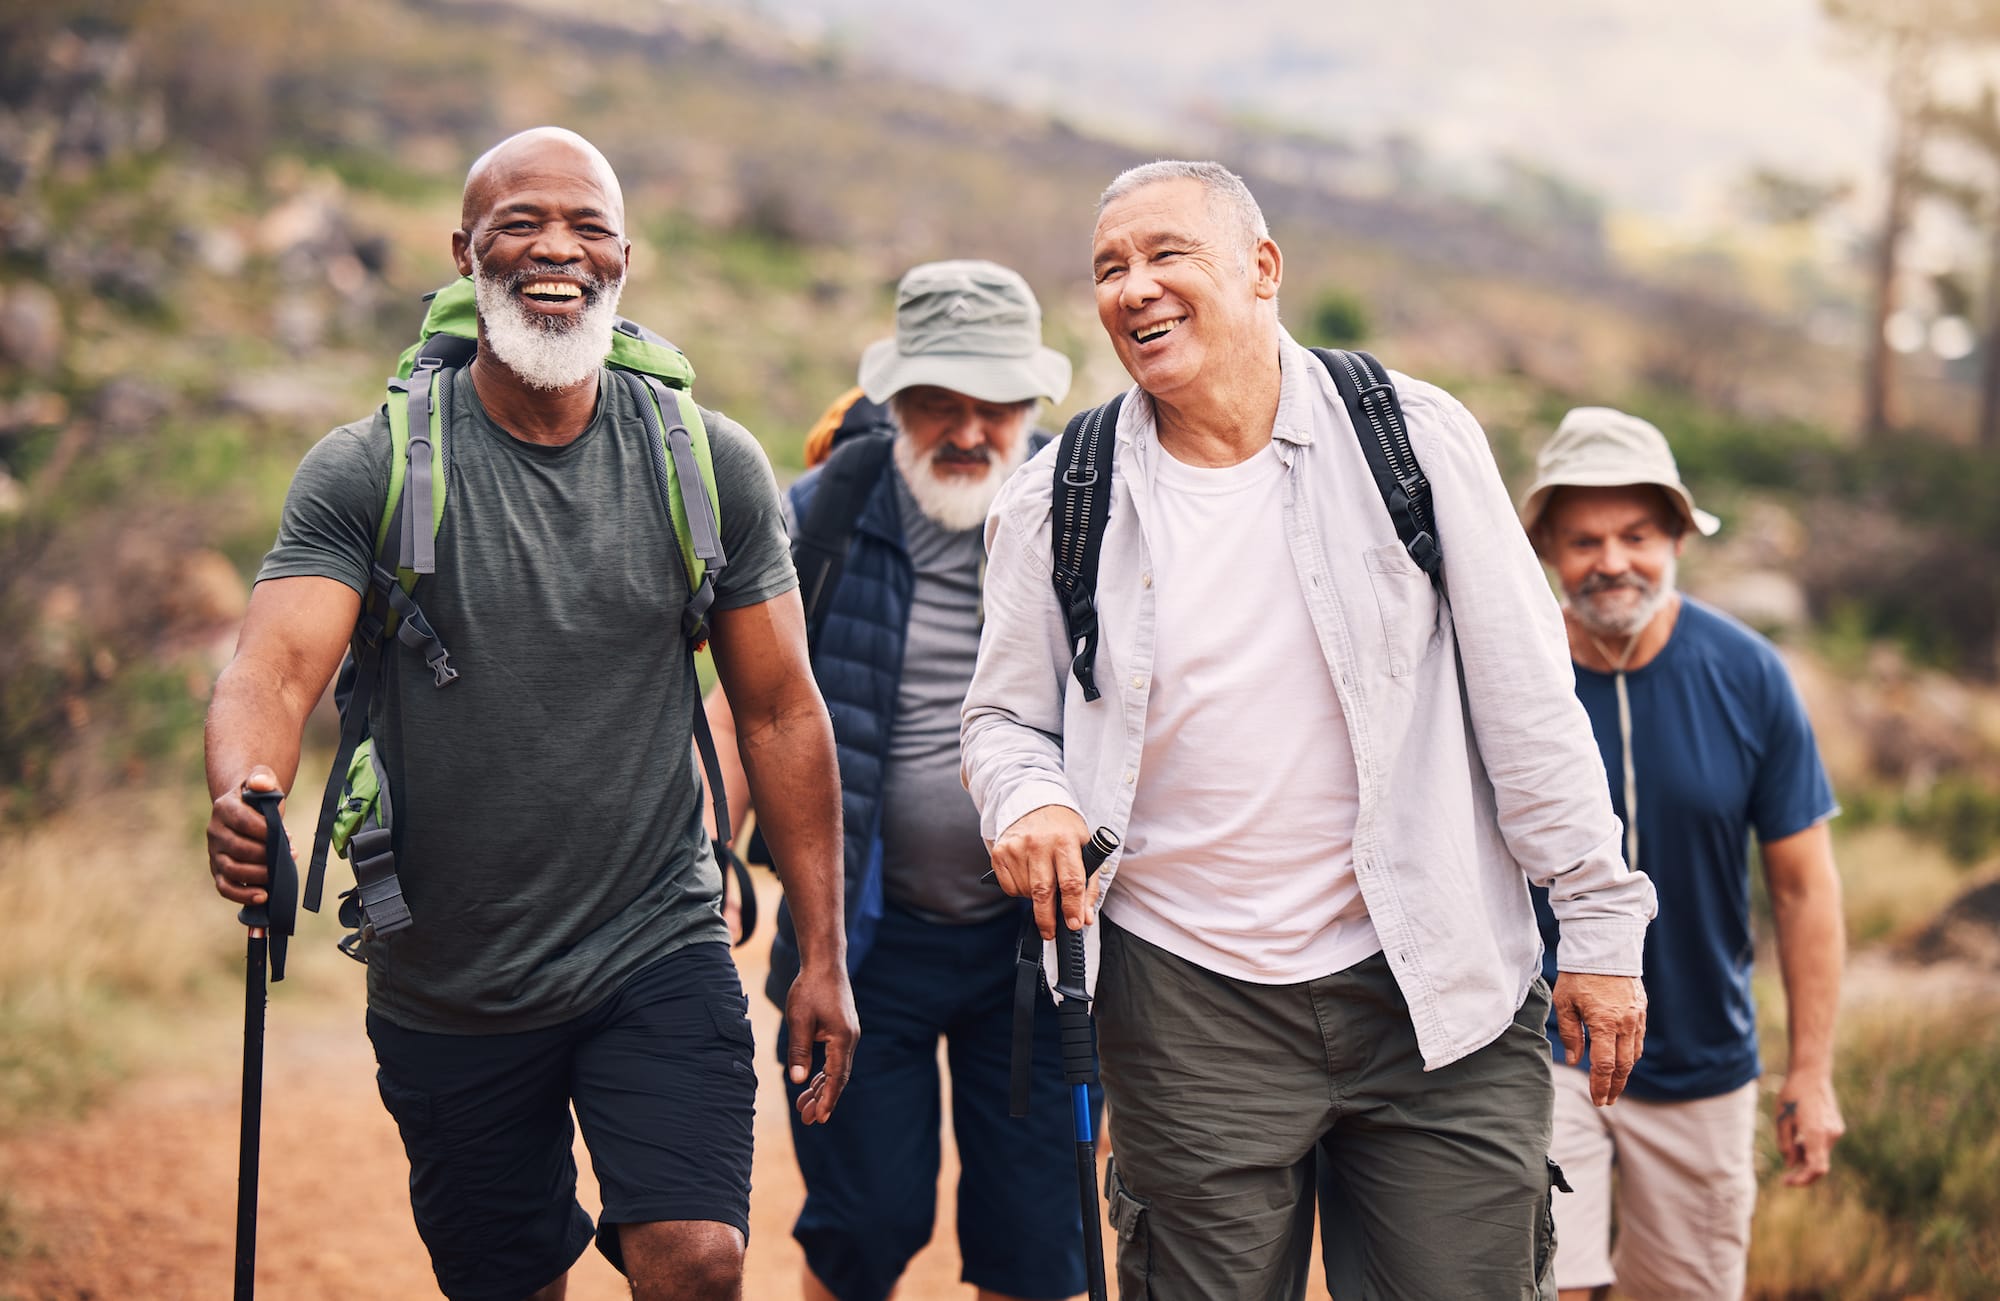 Group of elderly gay men on a hike